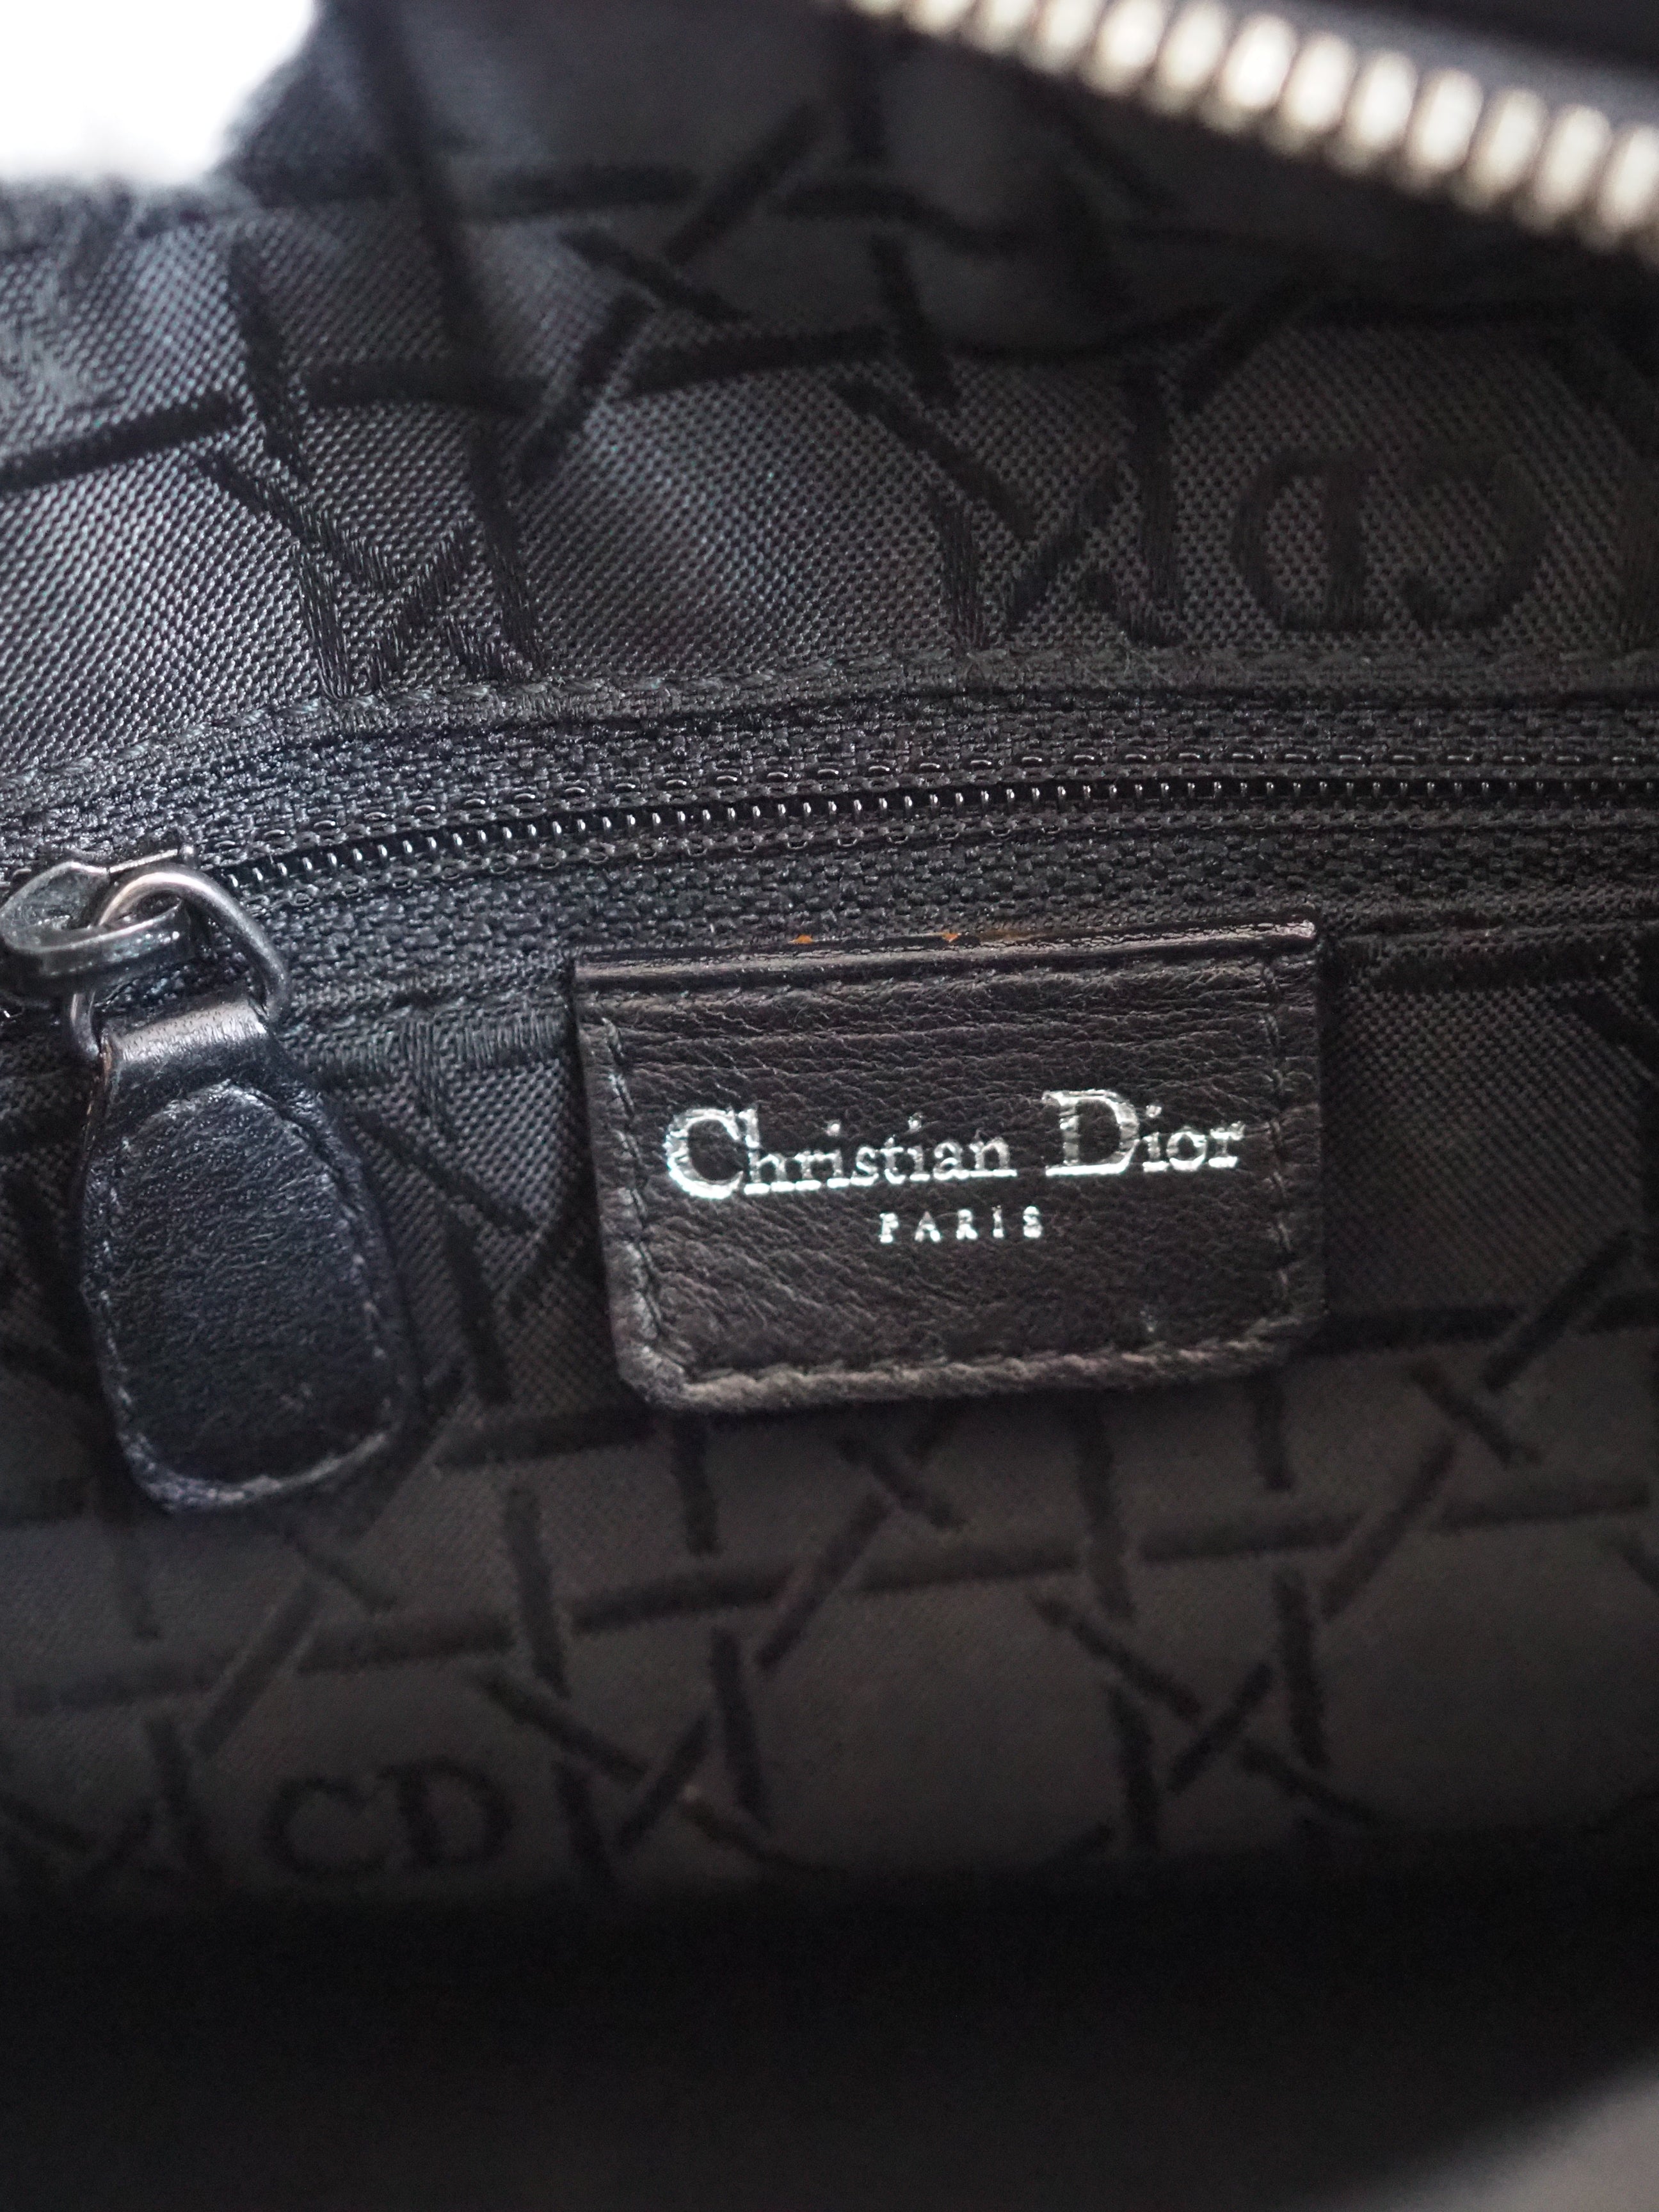 Christian Dior Lady Dior 2way Handbag